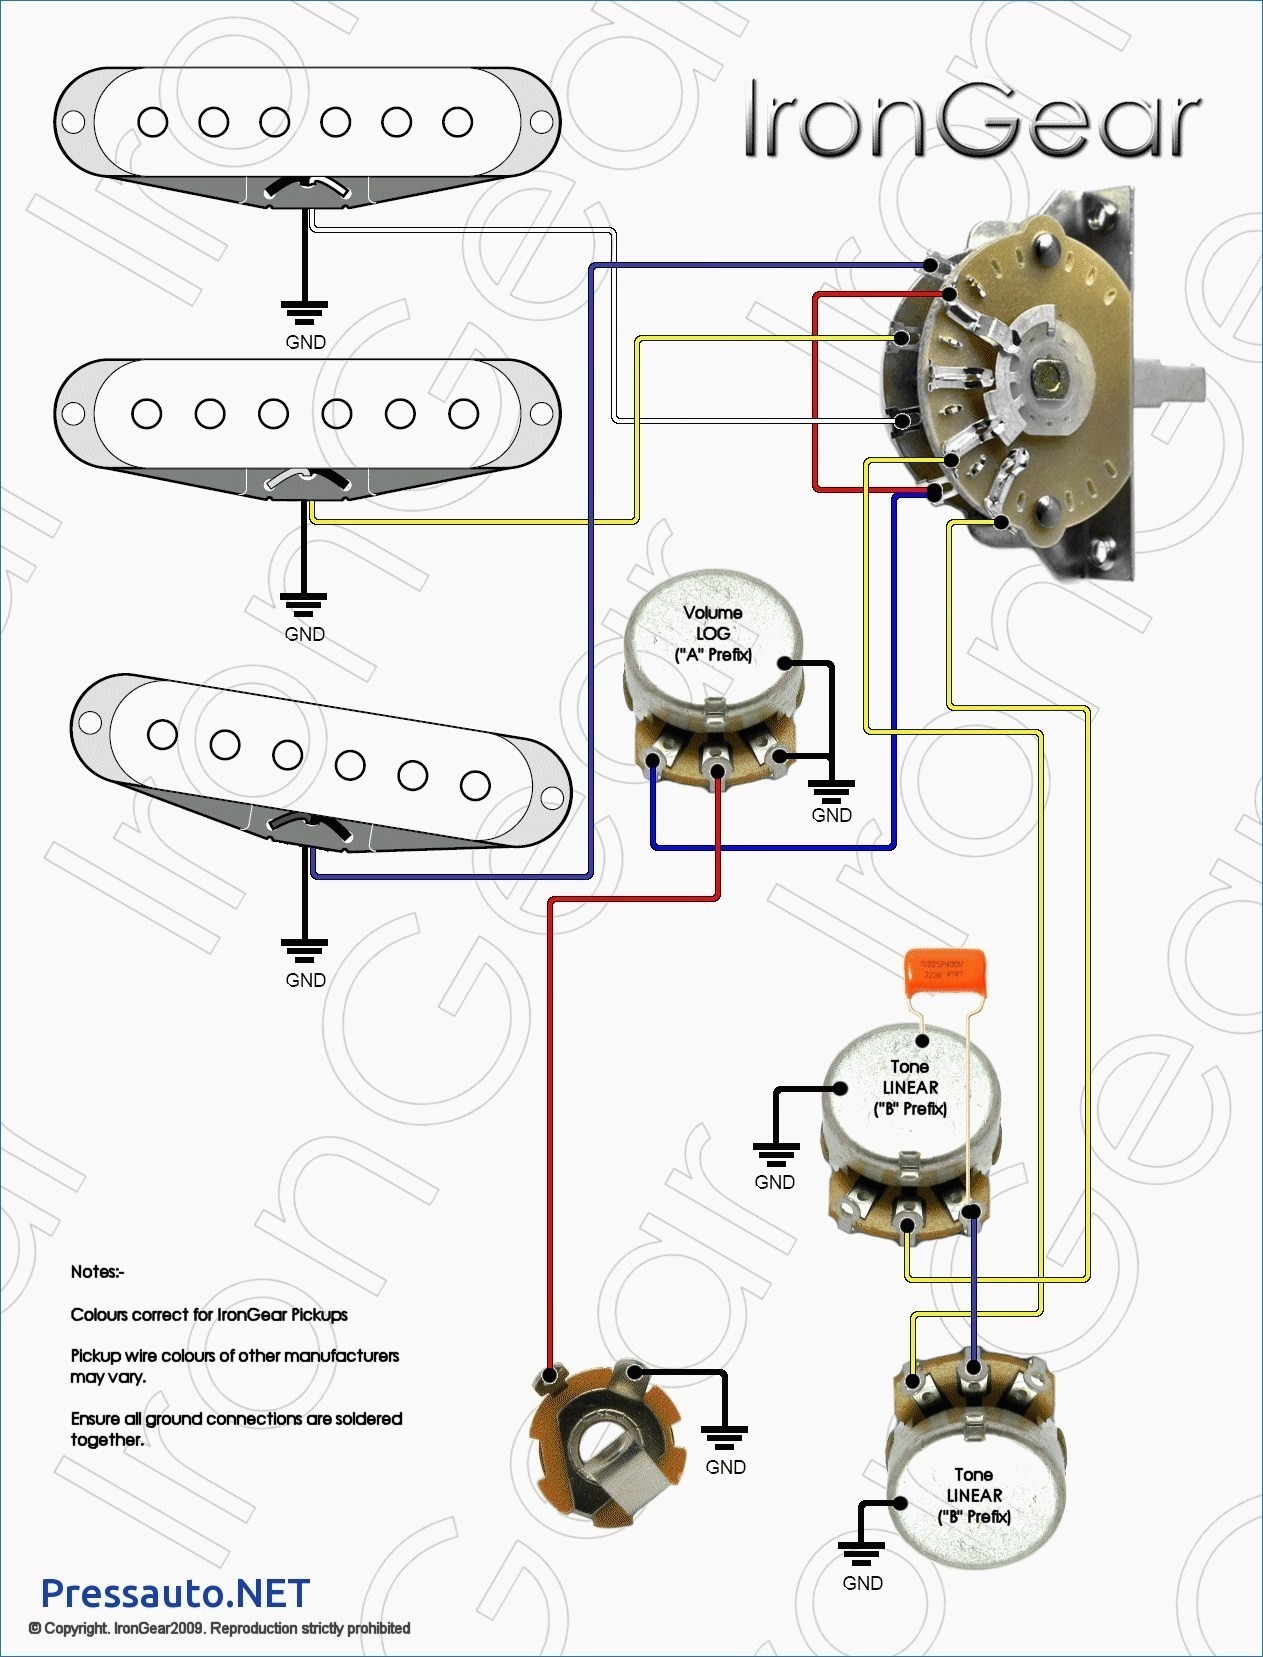 Wiring Diagram Guitar 3 Way Switch New Wiring Diagram Guitar 3 Way Switch Valid Three Humbucker